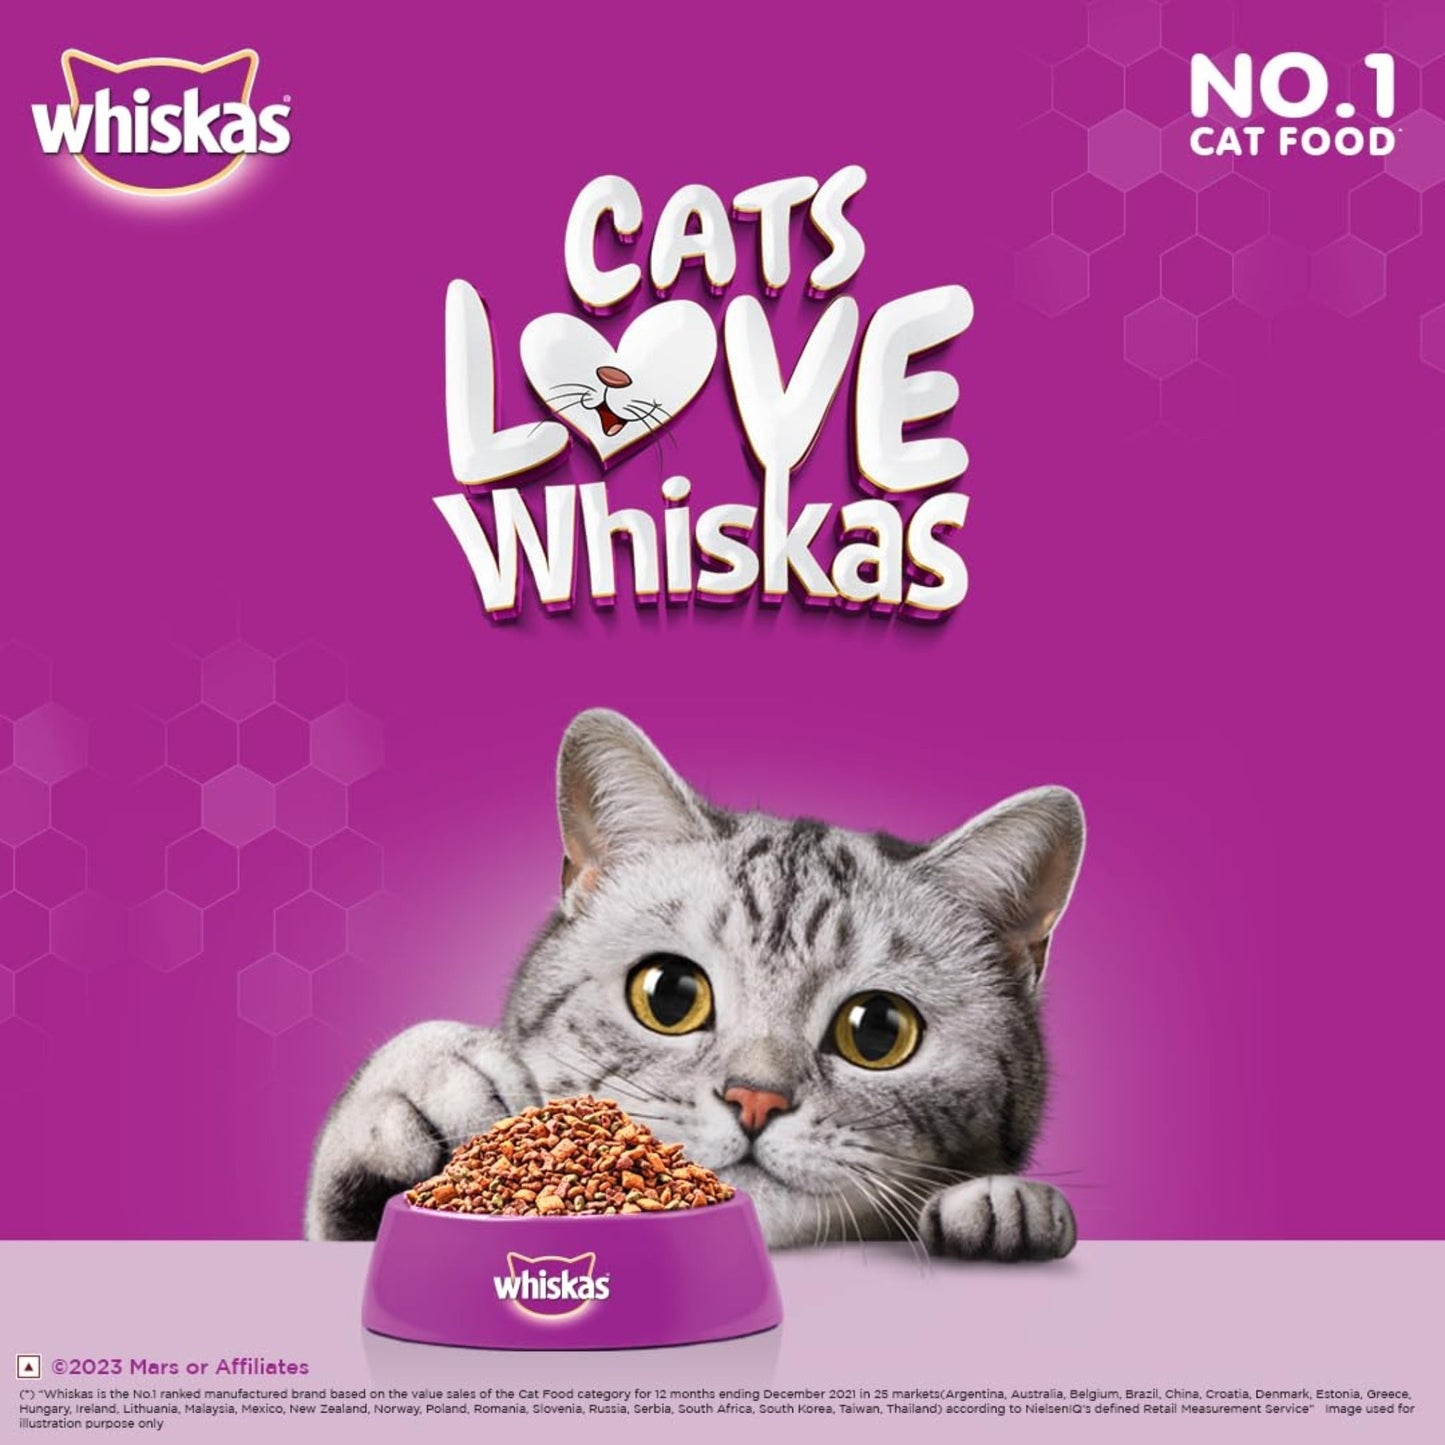 Whiskas Adult Dry Cat Food, Ocean Fish Flavor, 7Kg